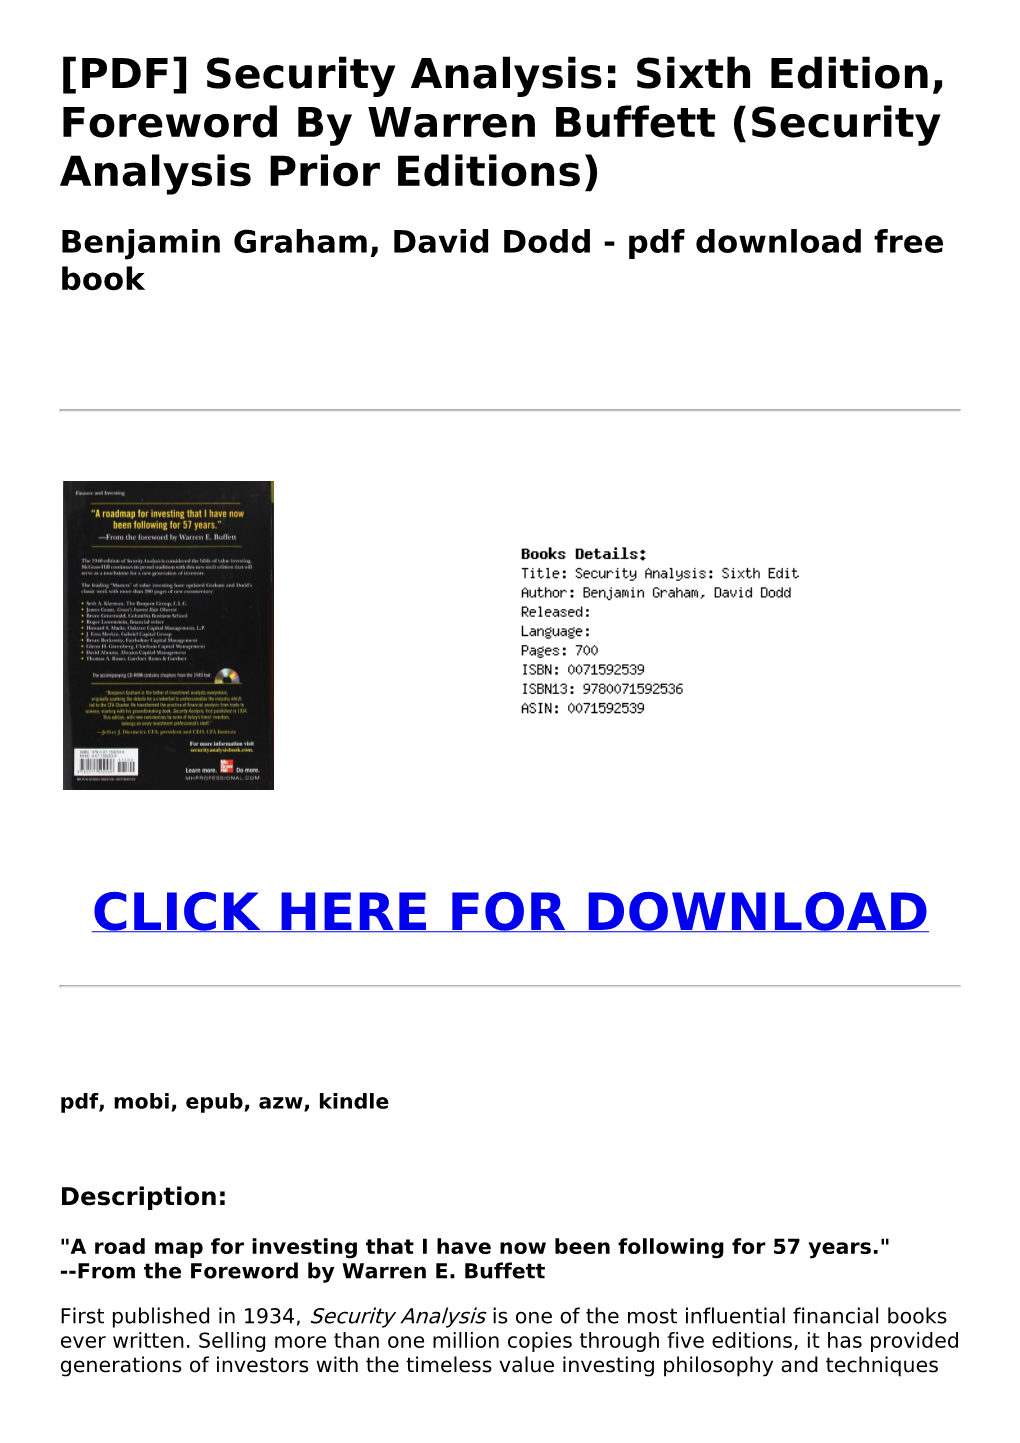 PDF Security Analysis: Sixth Edition, Foreword by Warren Buffett